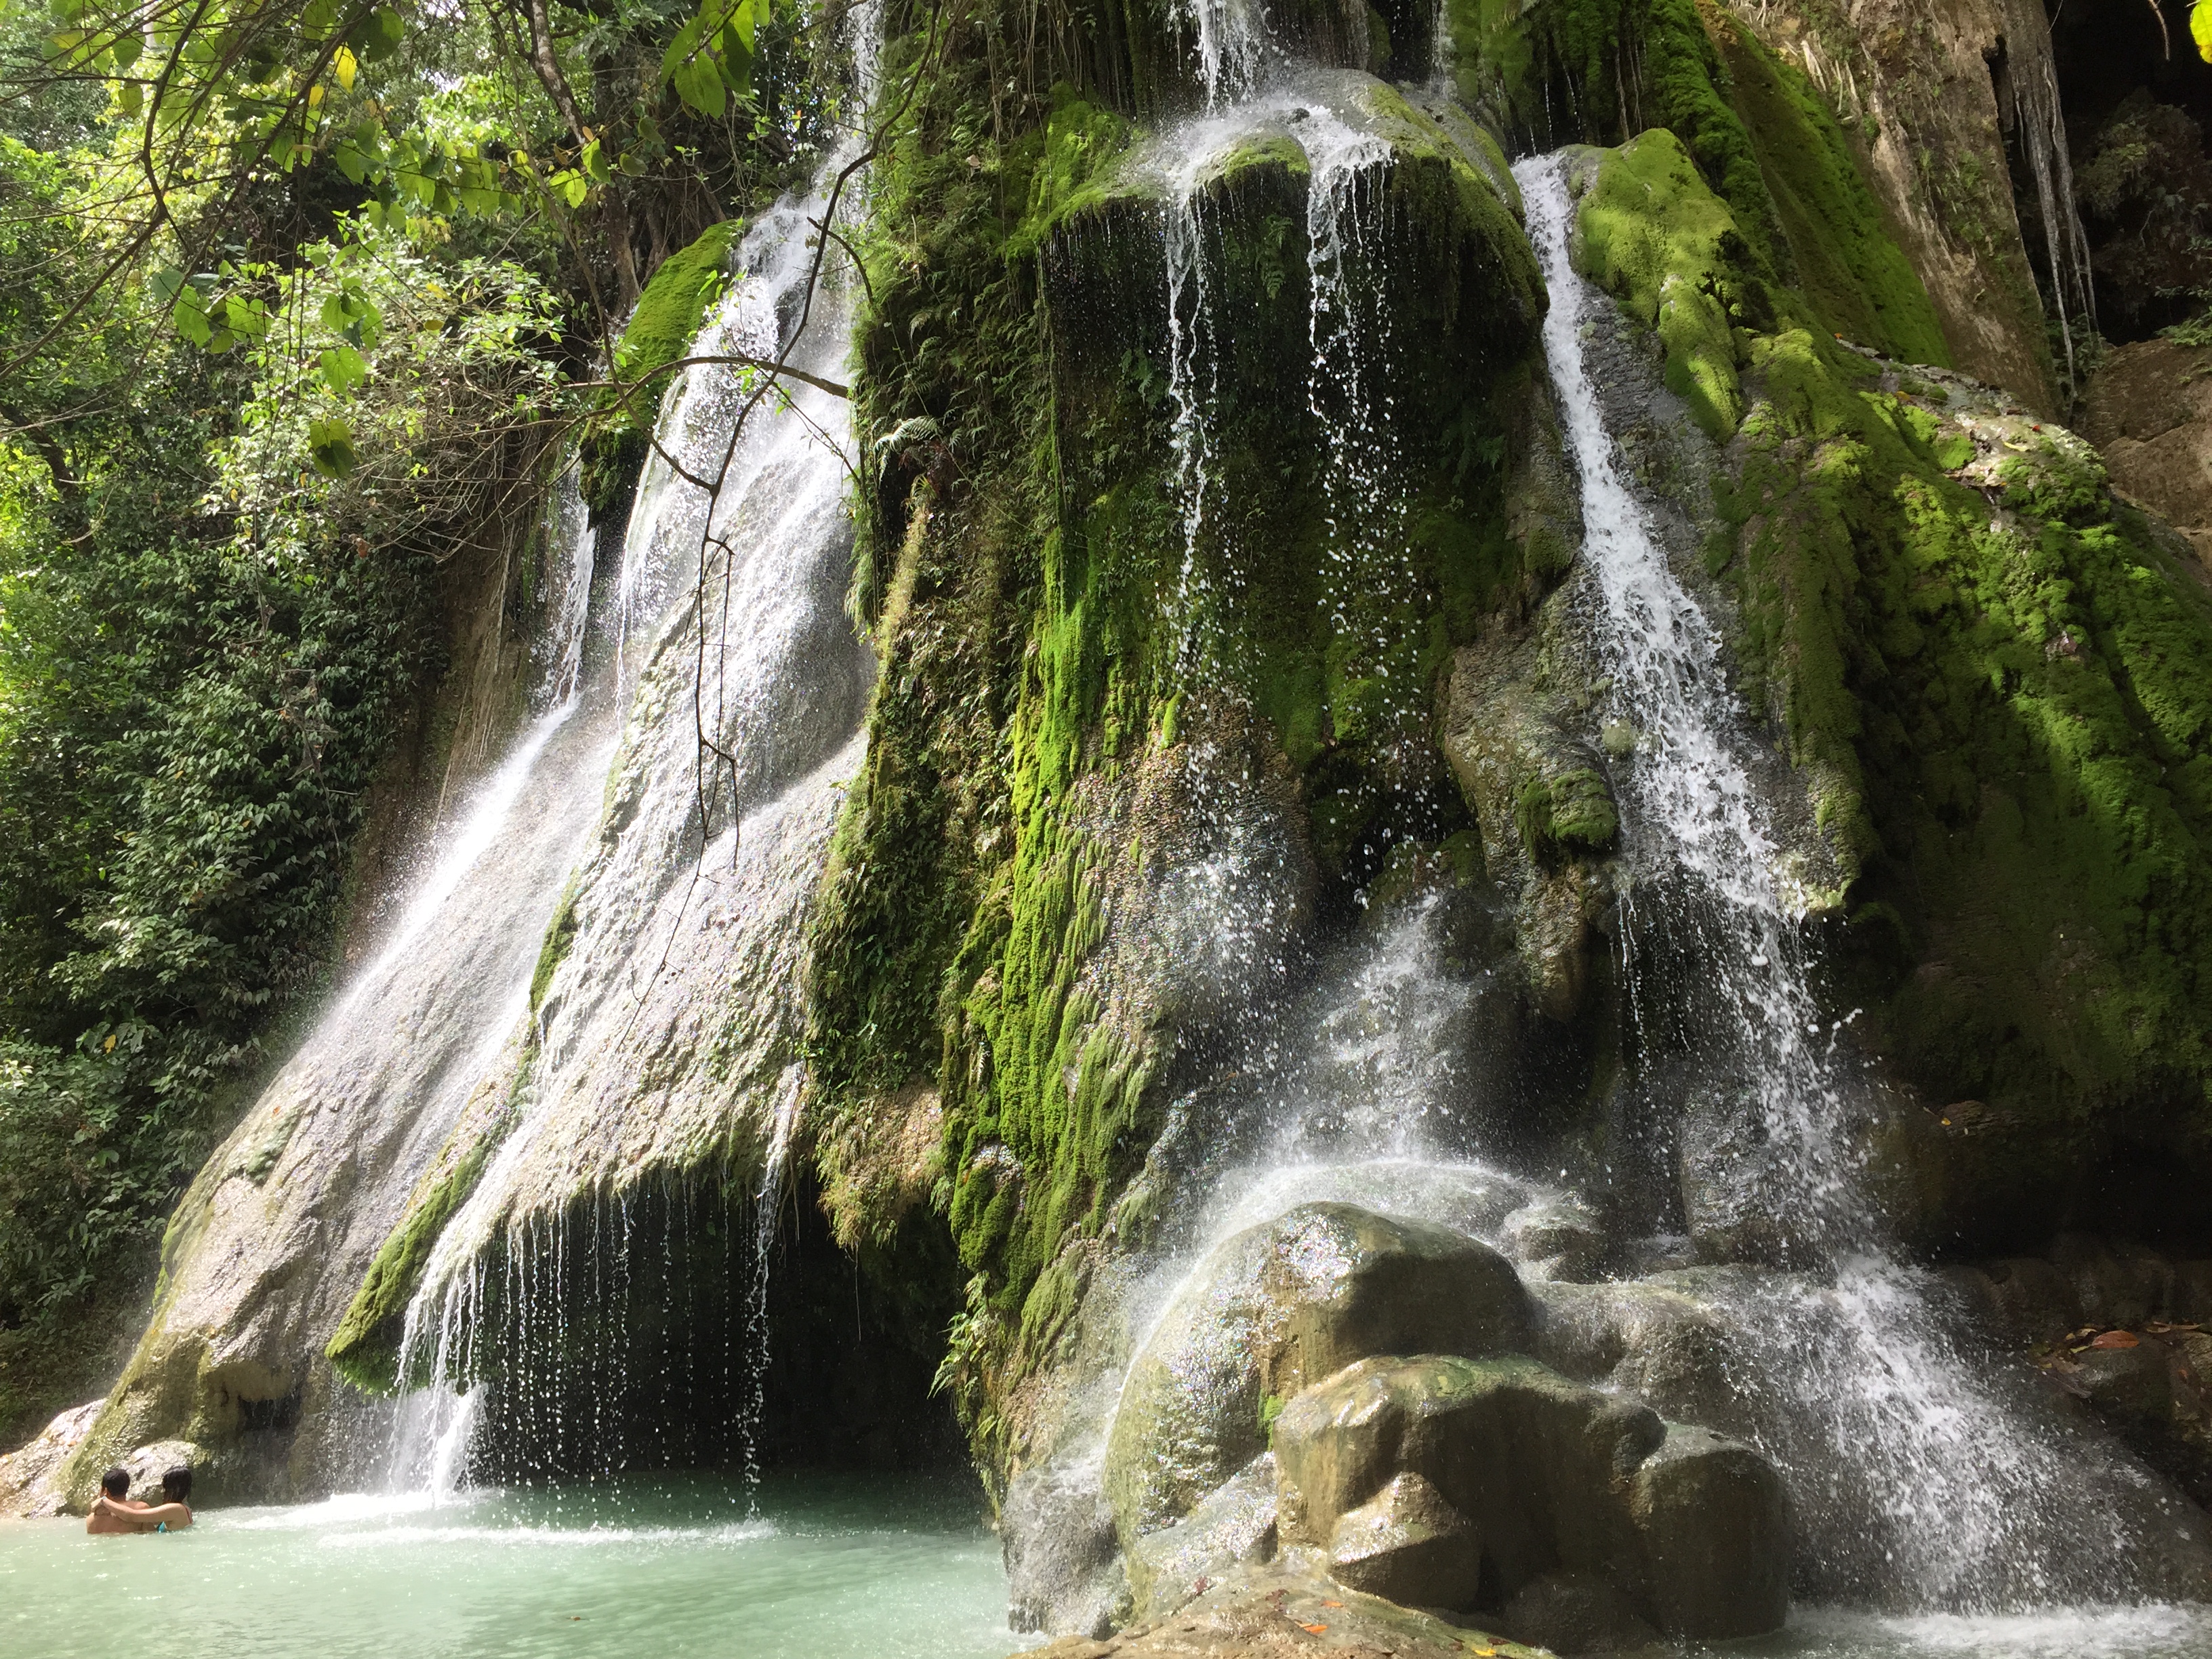 Batlag falls a truly majestic waterfall